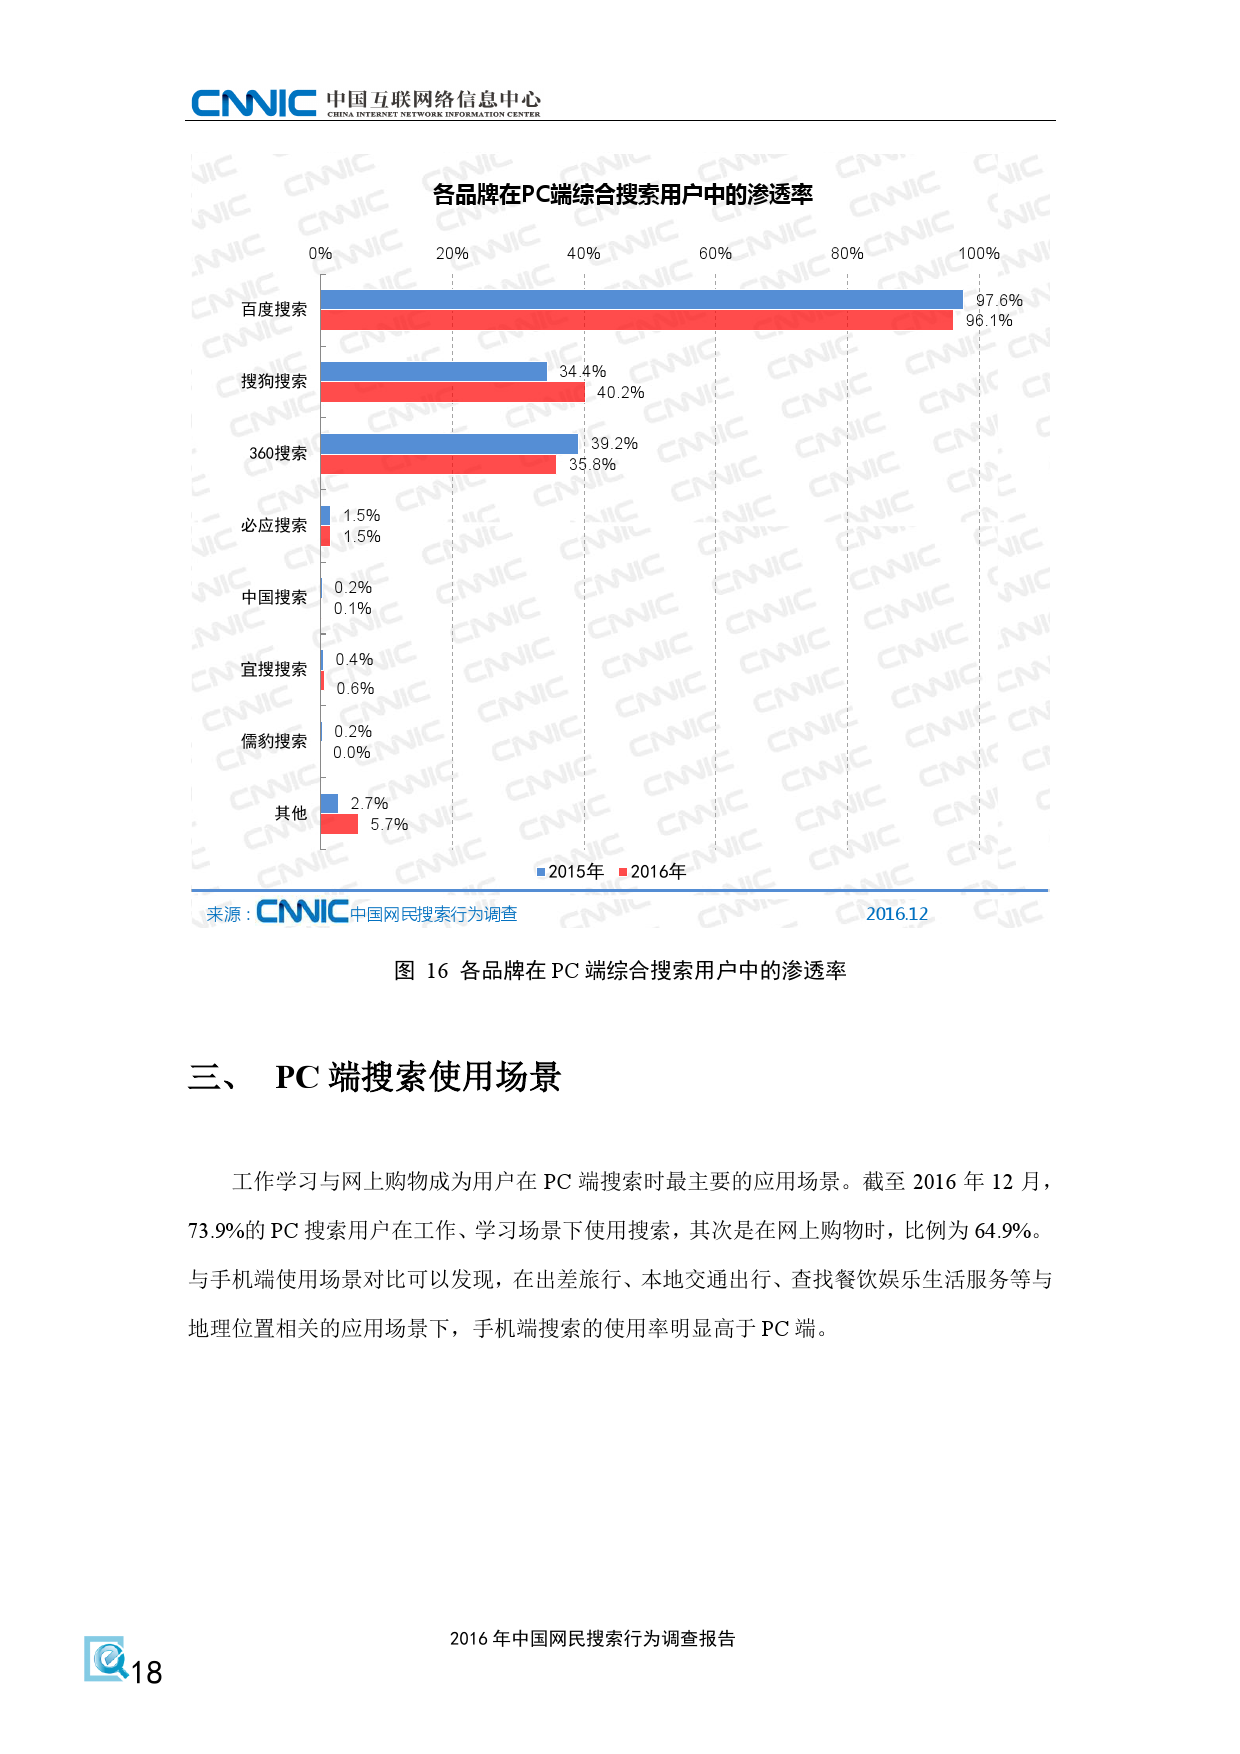 CNNIC：2016年中国网民搜索行为调查报告-Ceacer 网安